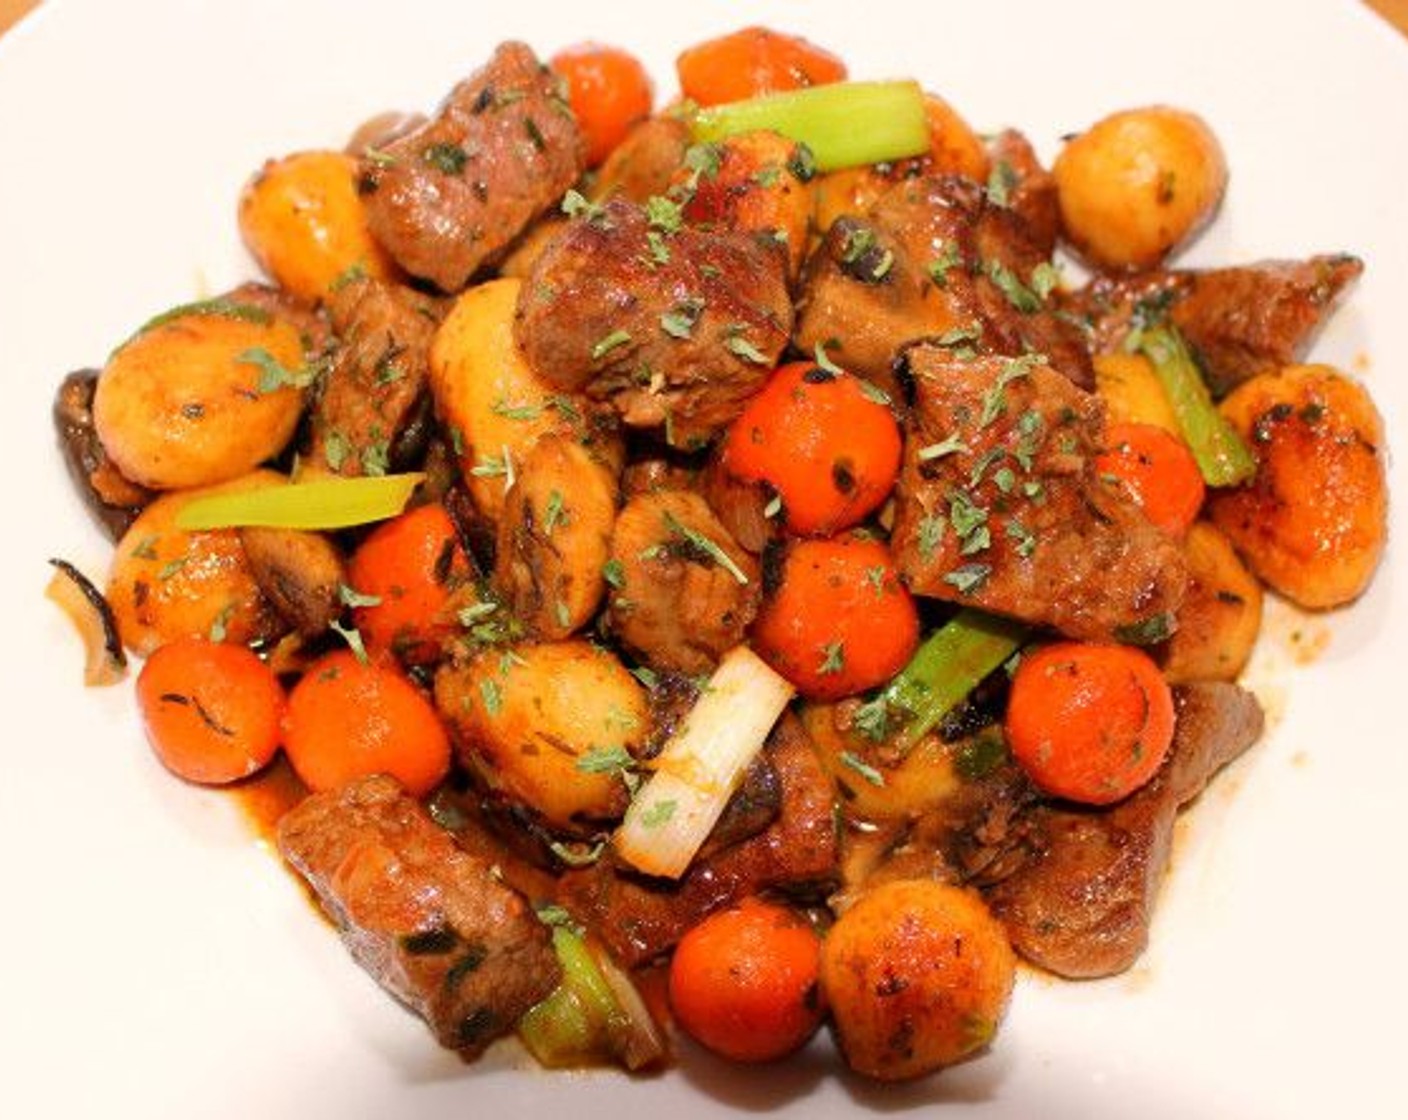 Sautéed Steak with Potatoes, Carrots & Onions